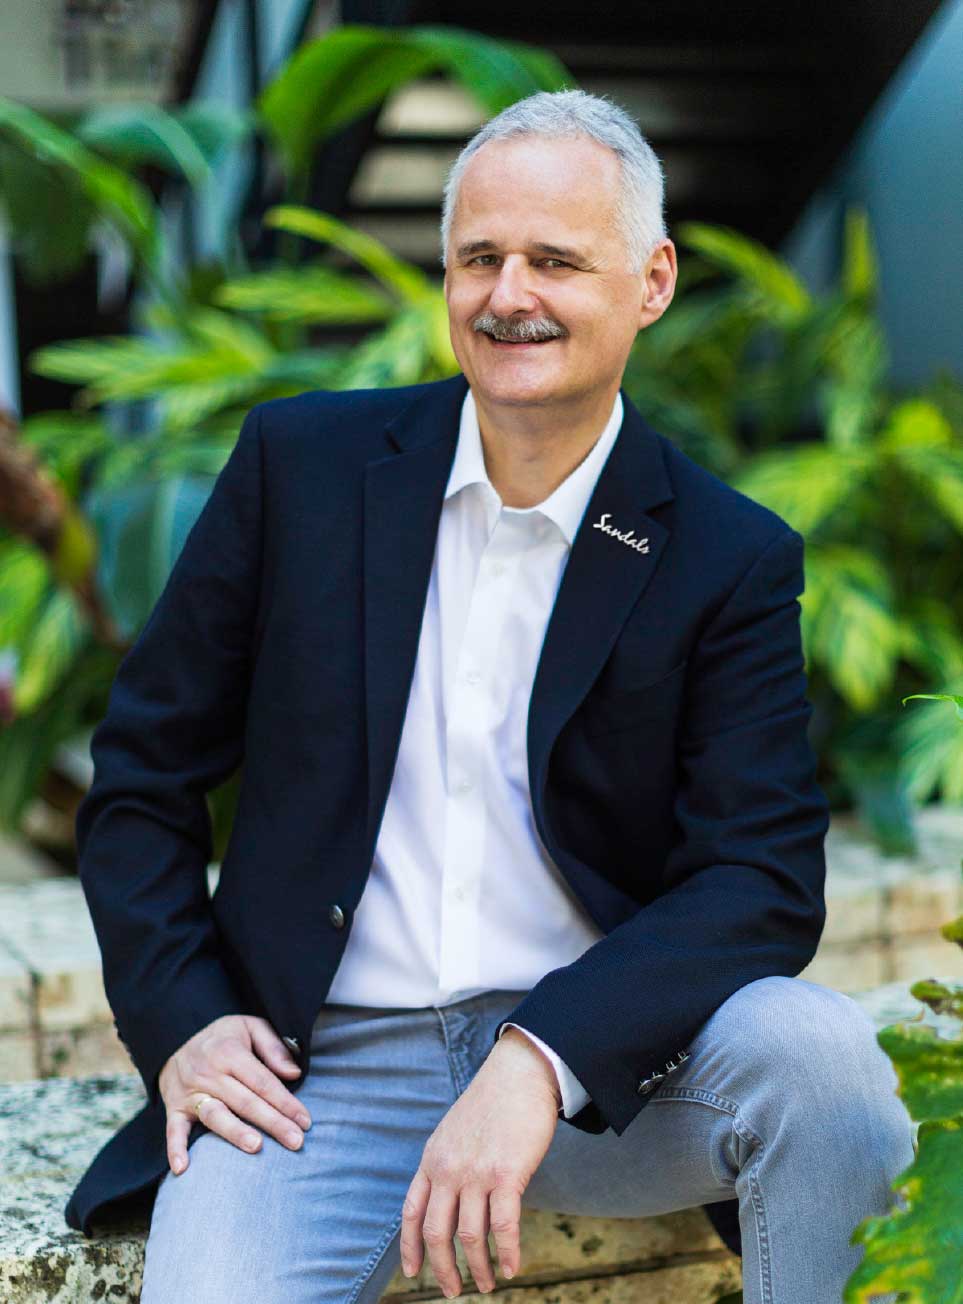 Gebhard Rainer, Sandals Resorts’ Group CEO